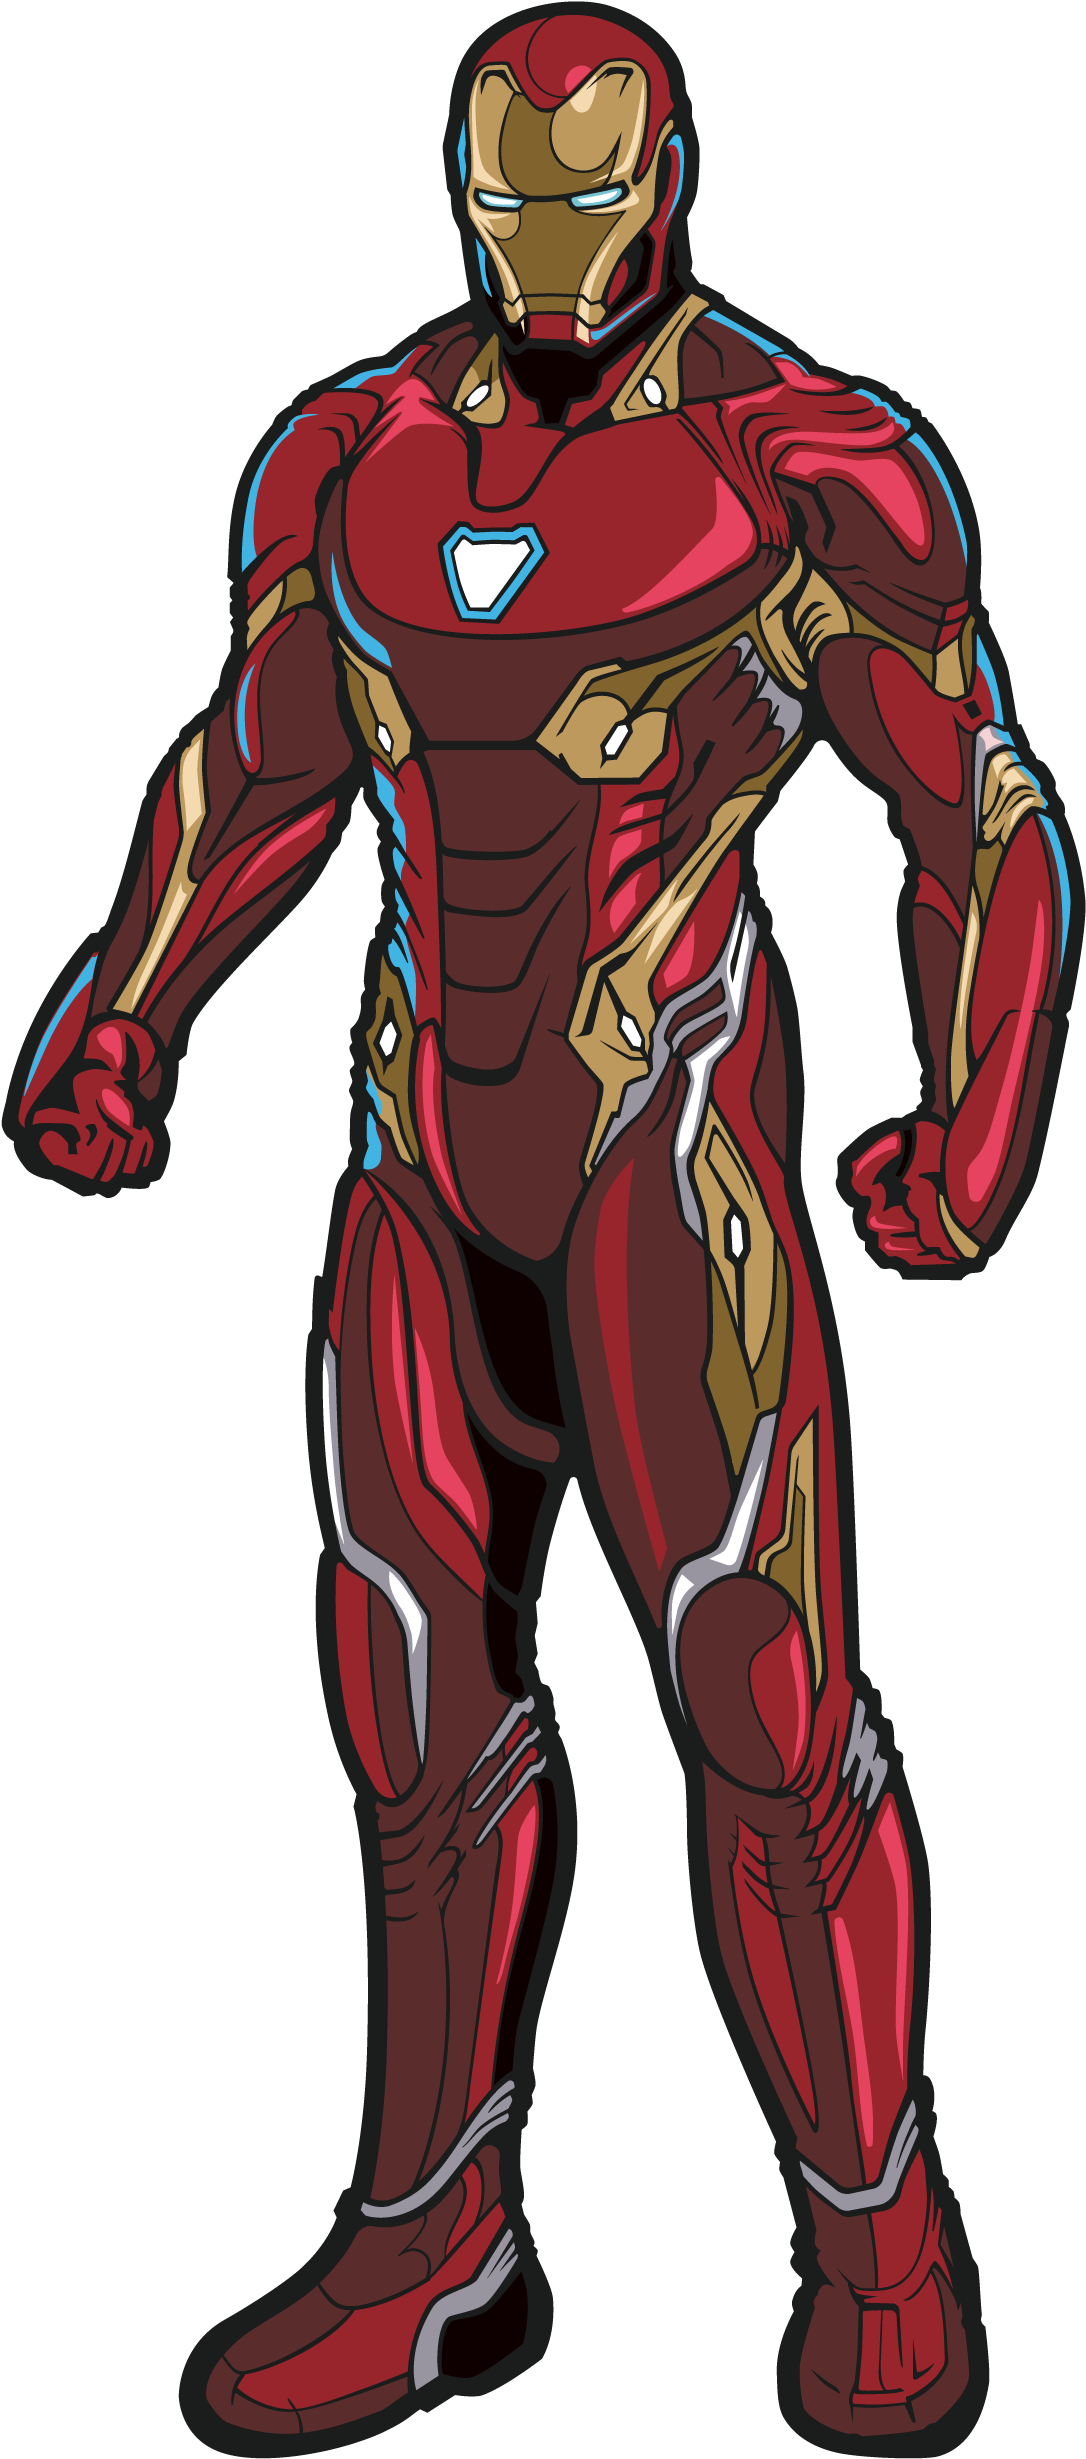 Marvel Infinity War Iron homme PNG Image Transparente